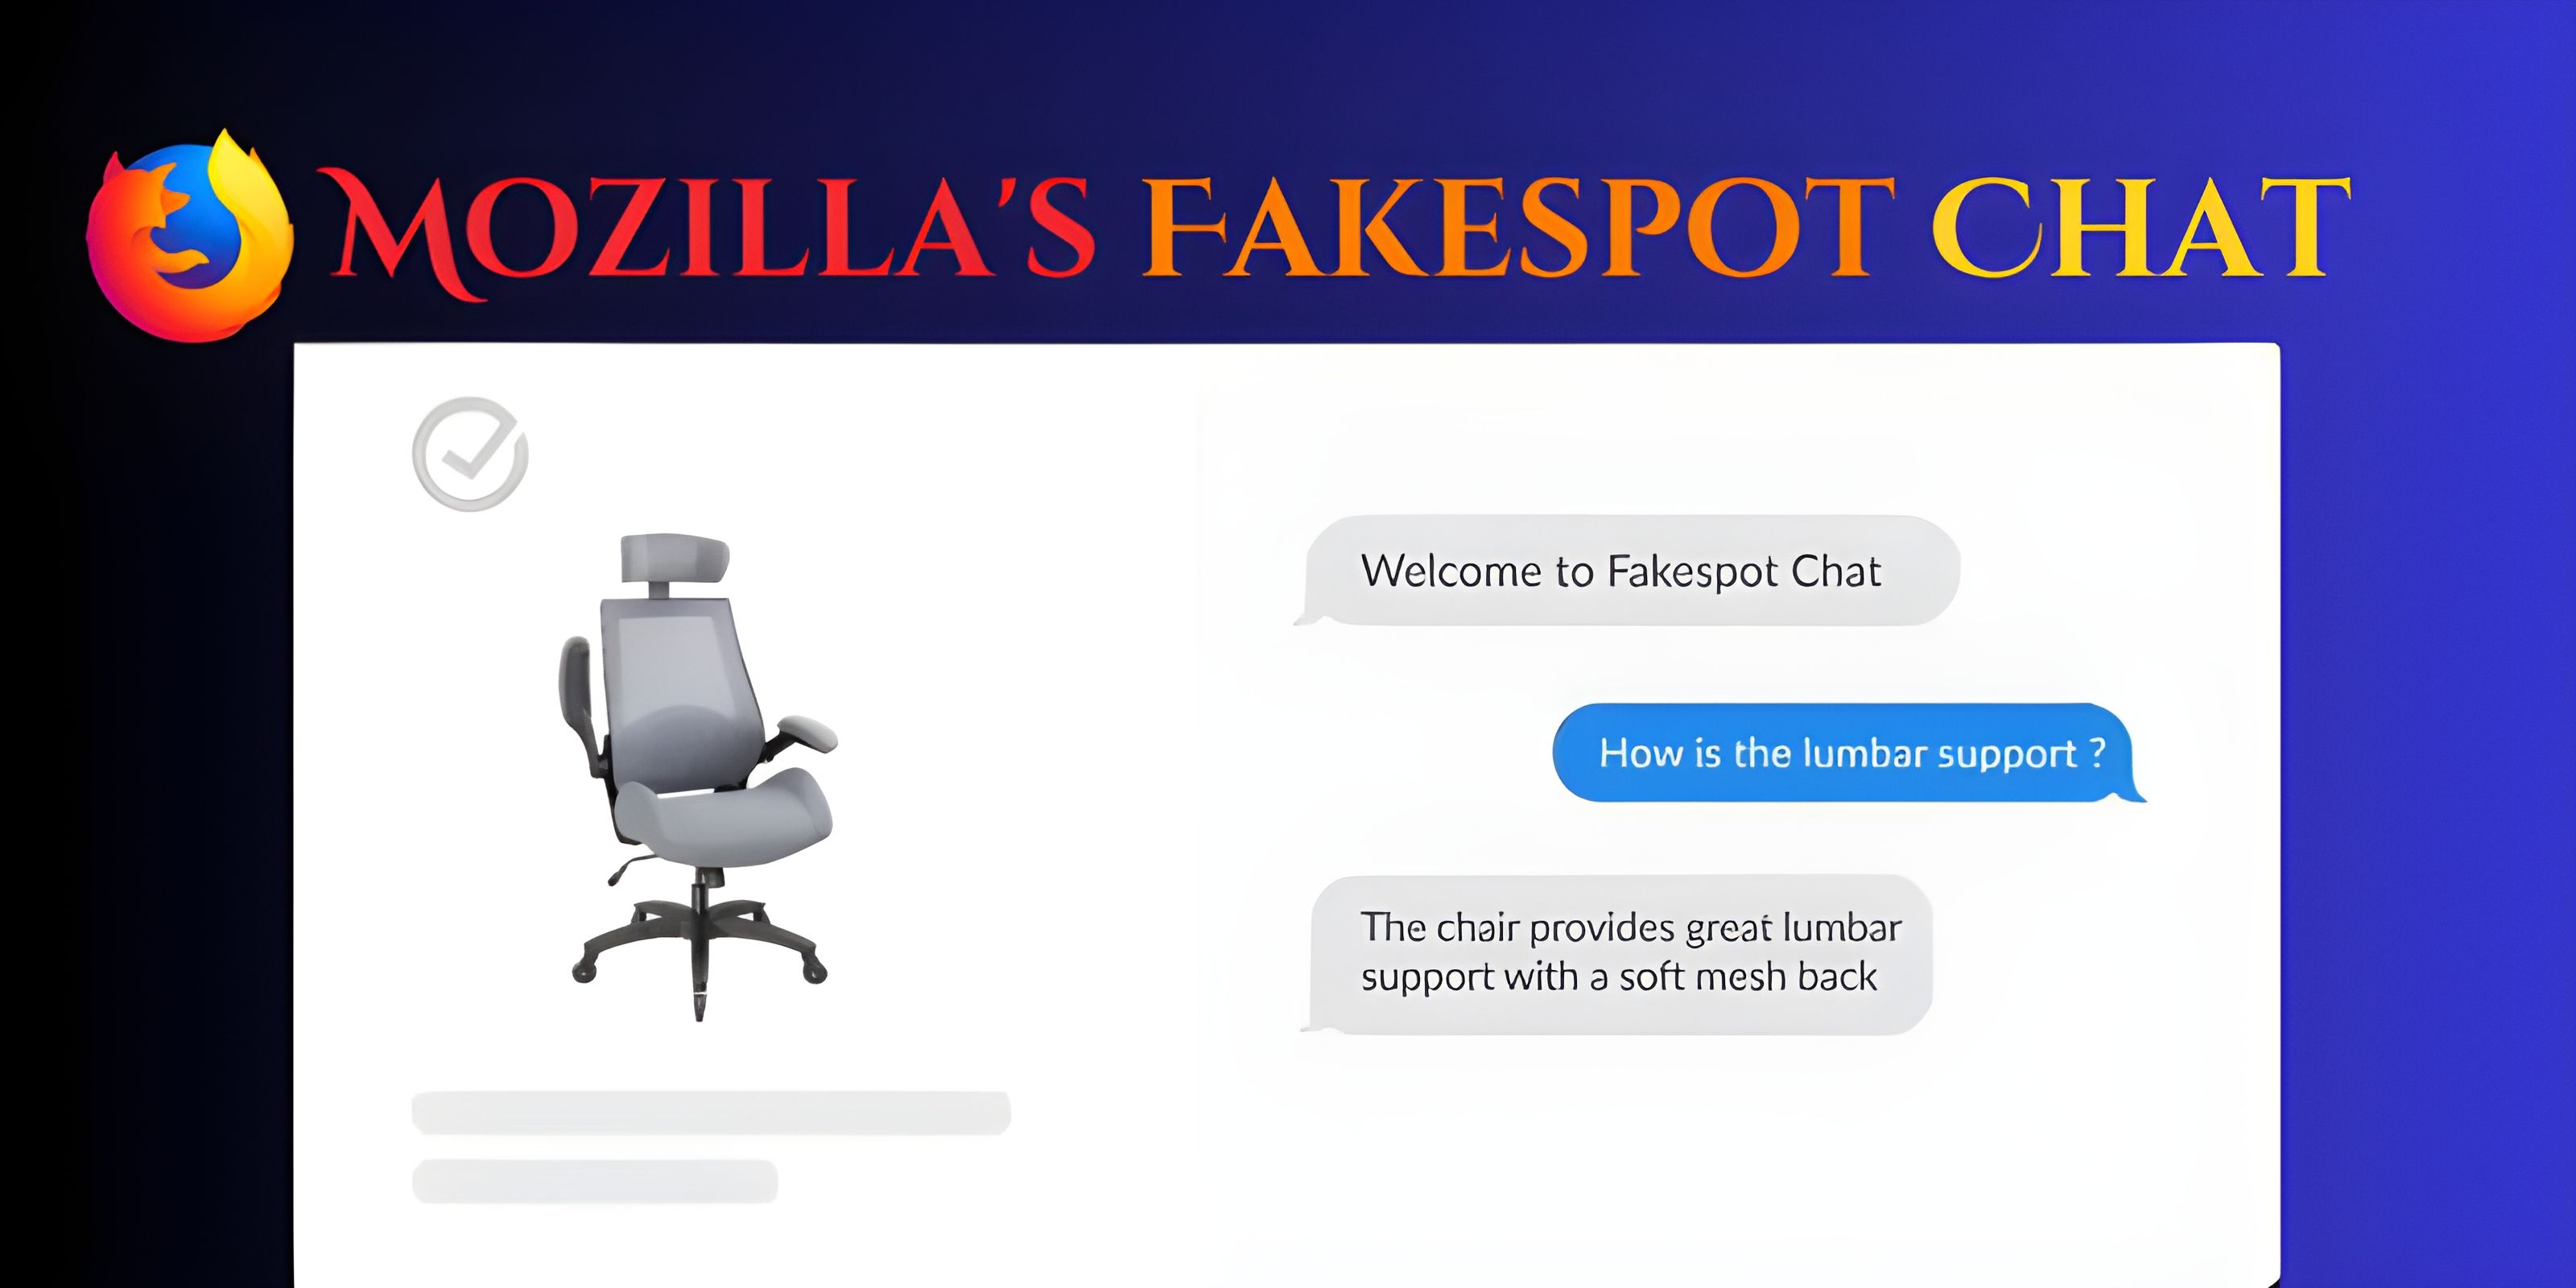 Say Goodbye to Fake Reviews with Mozilla's Fakespot Chat